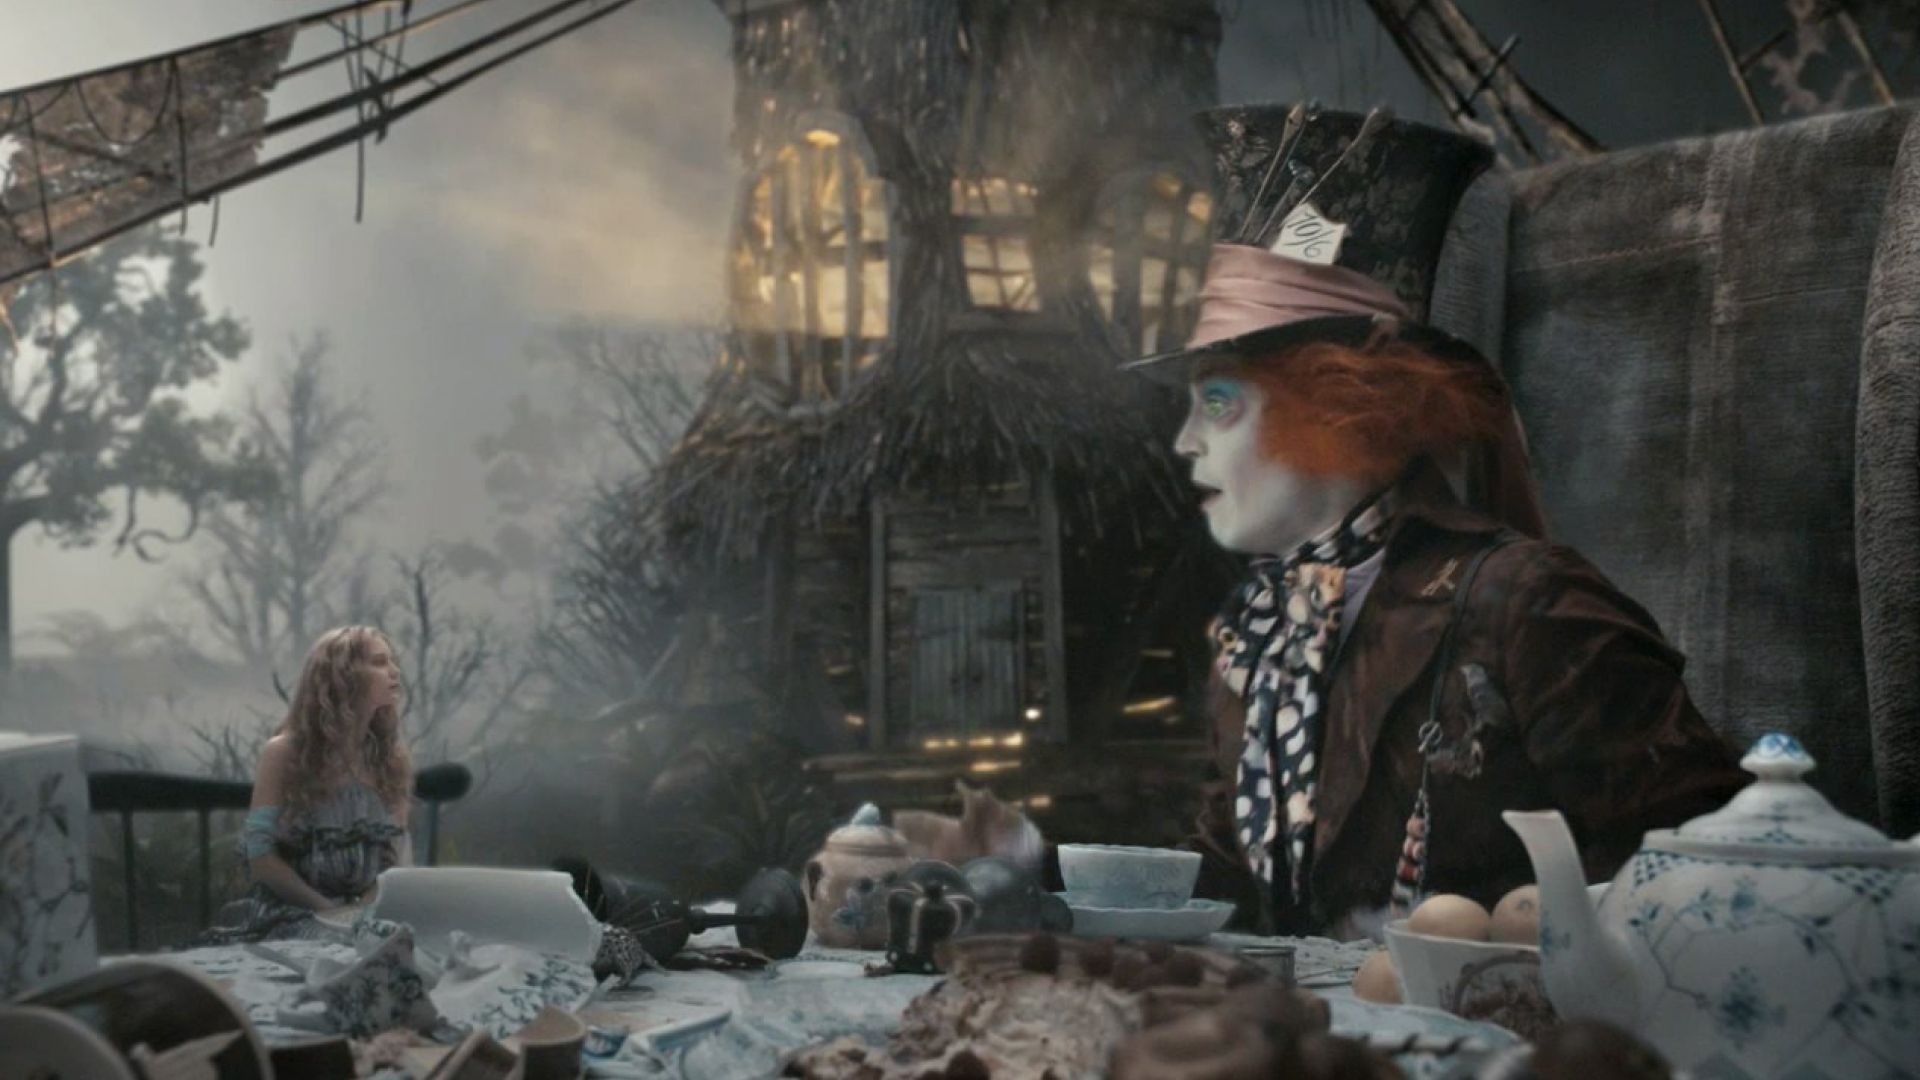 The Tea Party in Alice in Wonderland